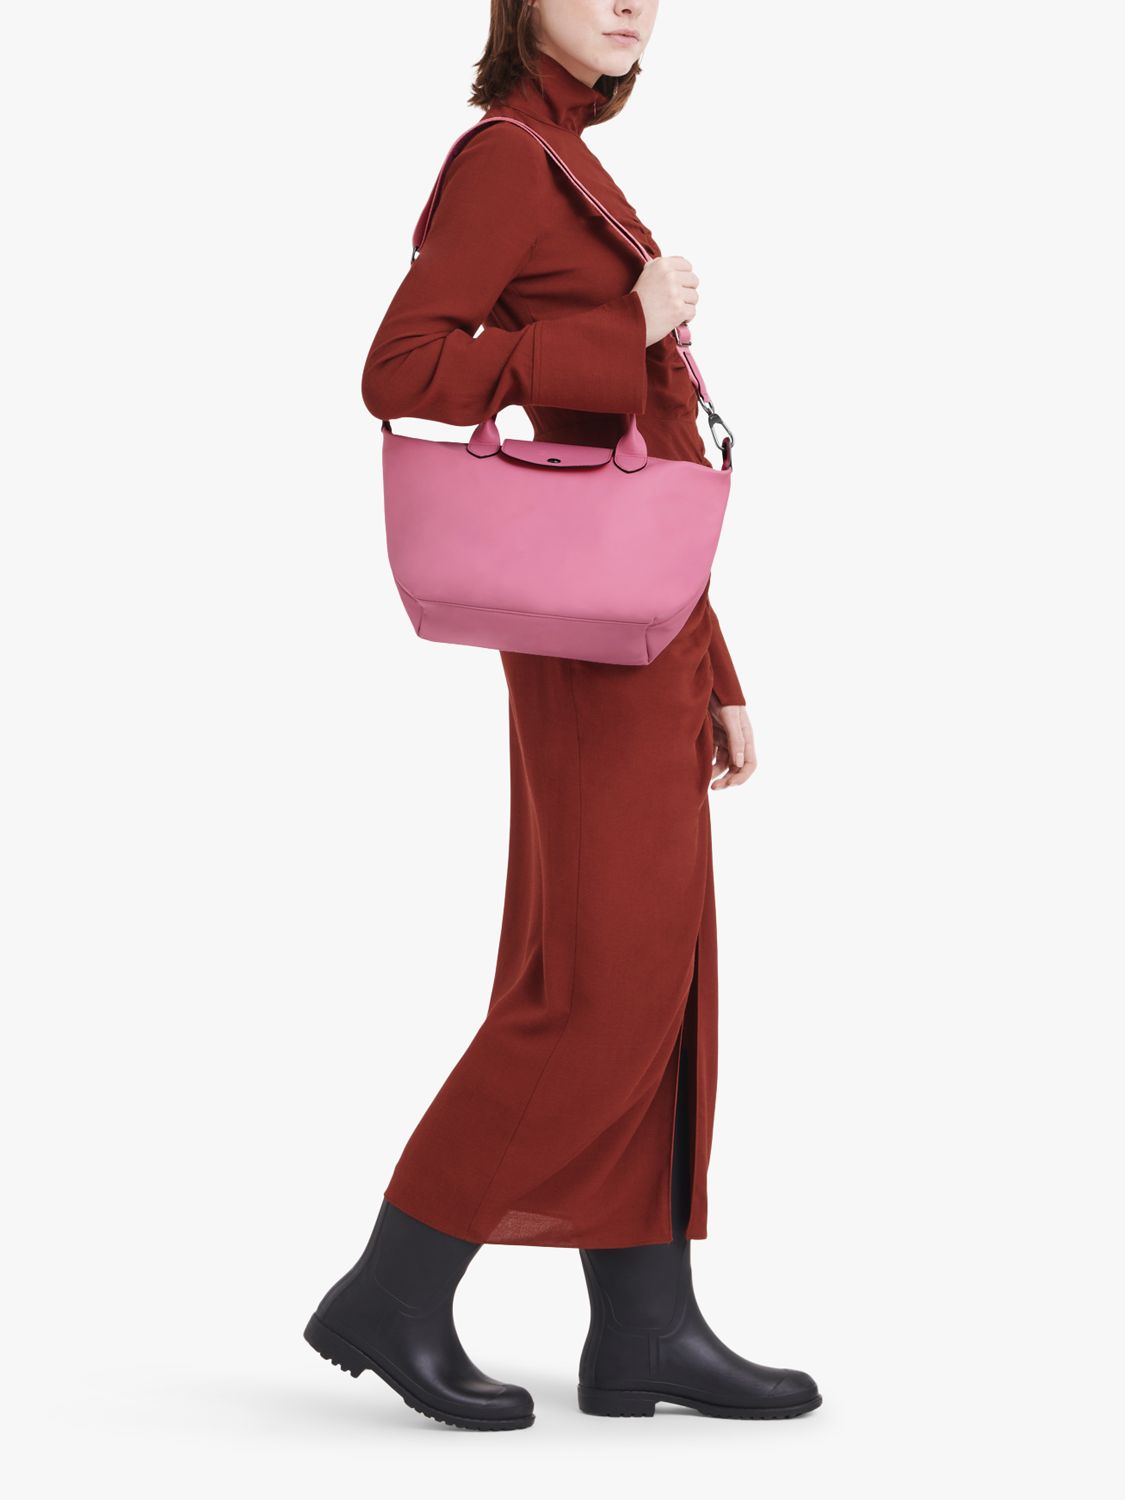 Pink Fever  Longchamp purse, Fashion, Longchamp outfit